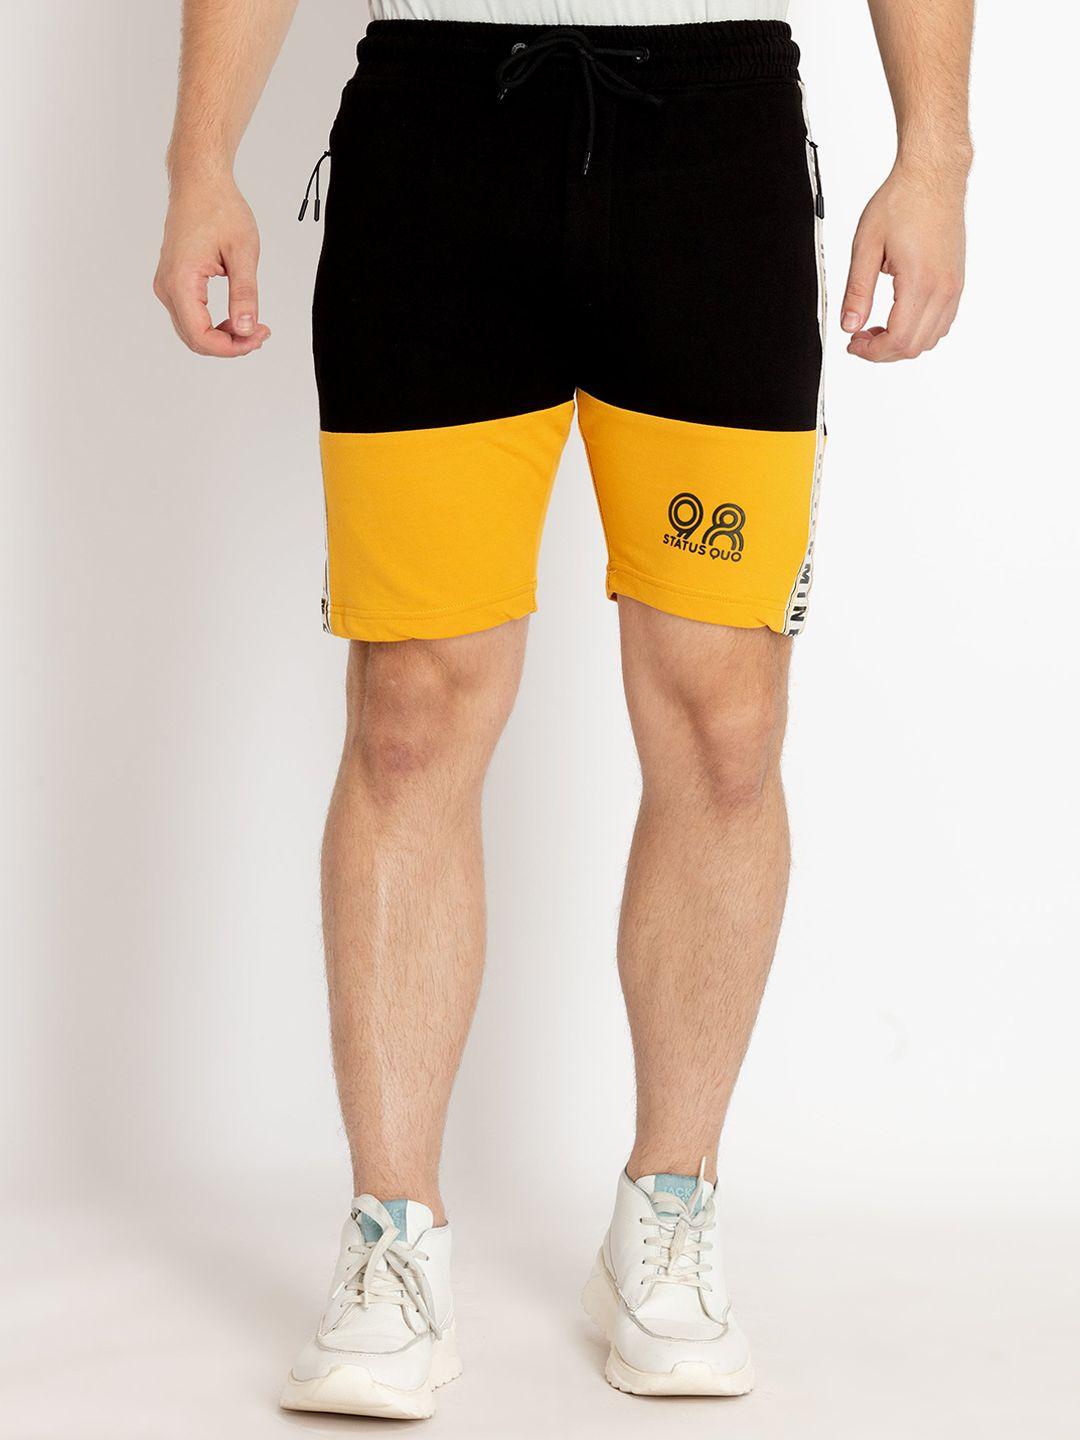 status quo men cotton mid-rise colourblocked shorts